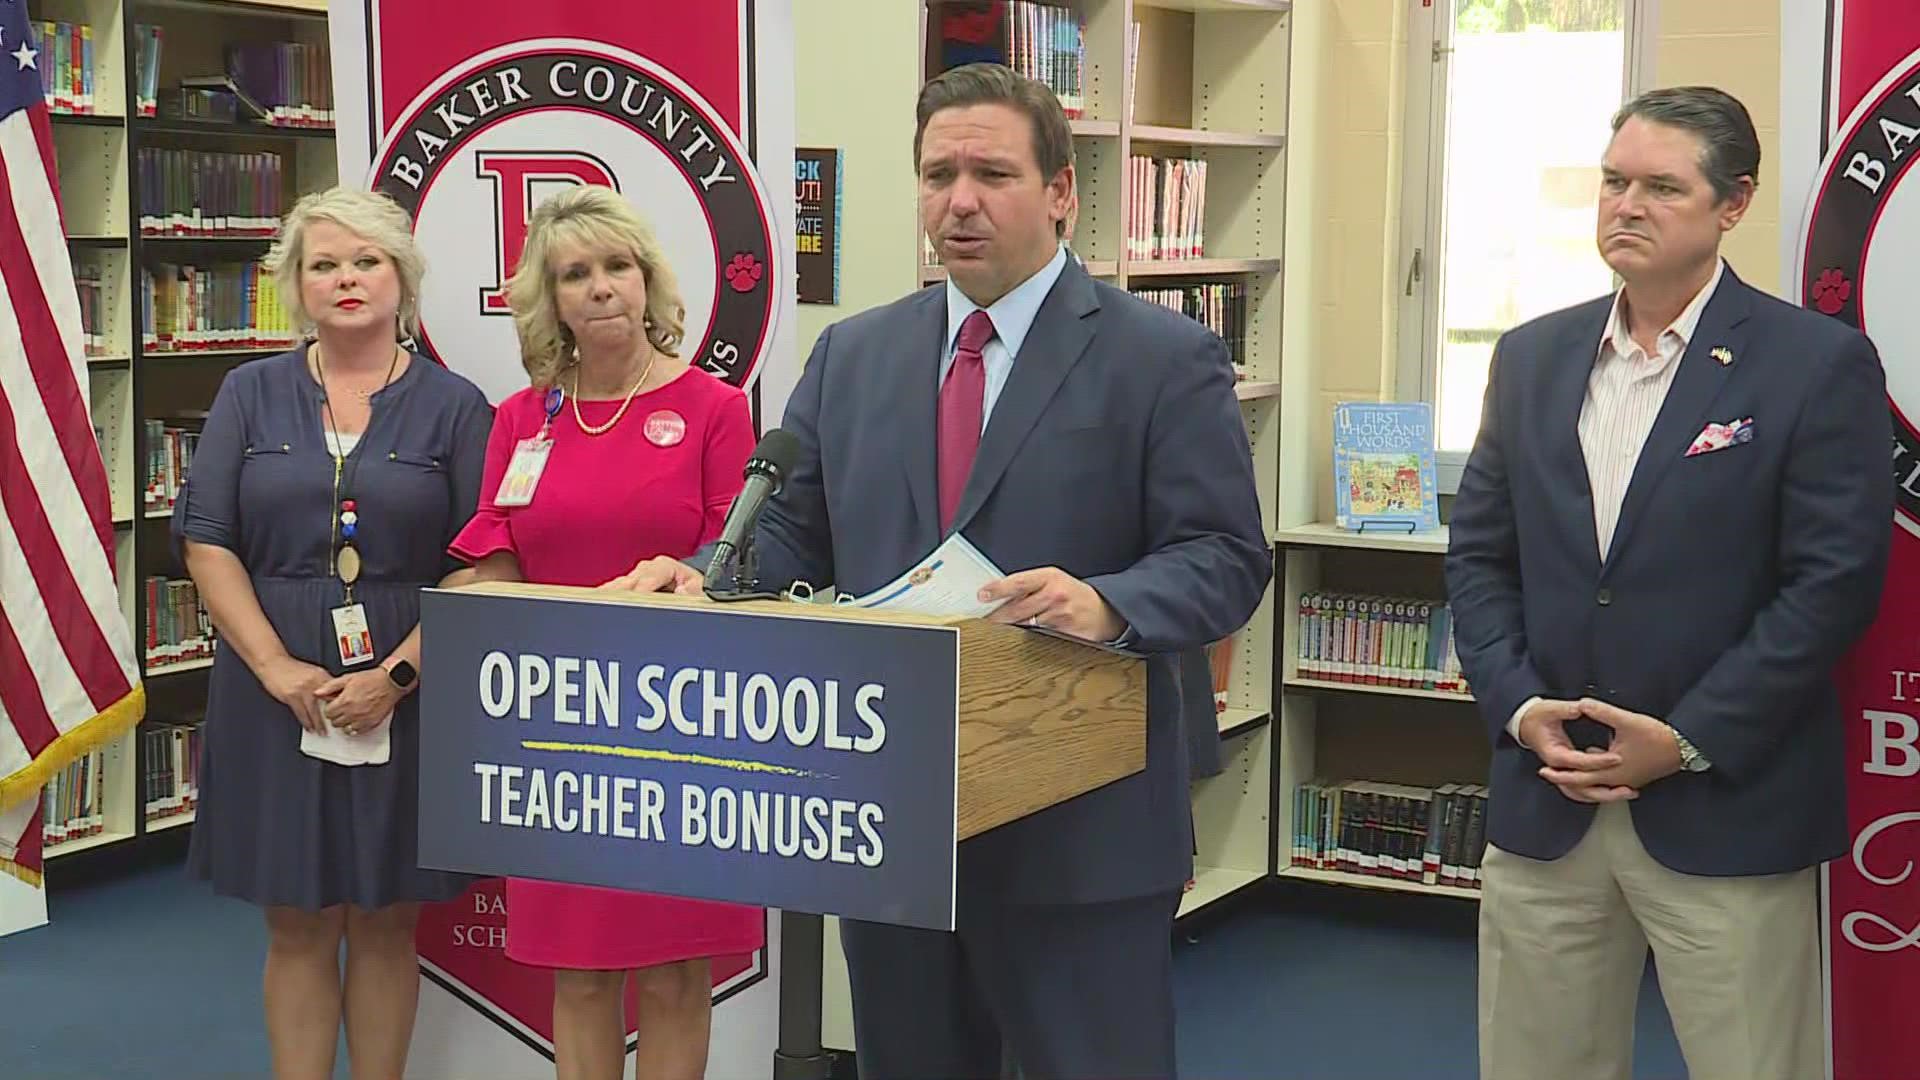 The governor announced an additional $1,000 bonus for all Florida principals and classroom teachers.